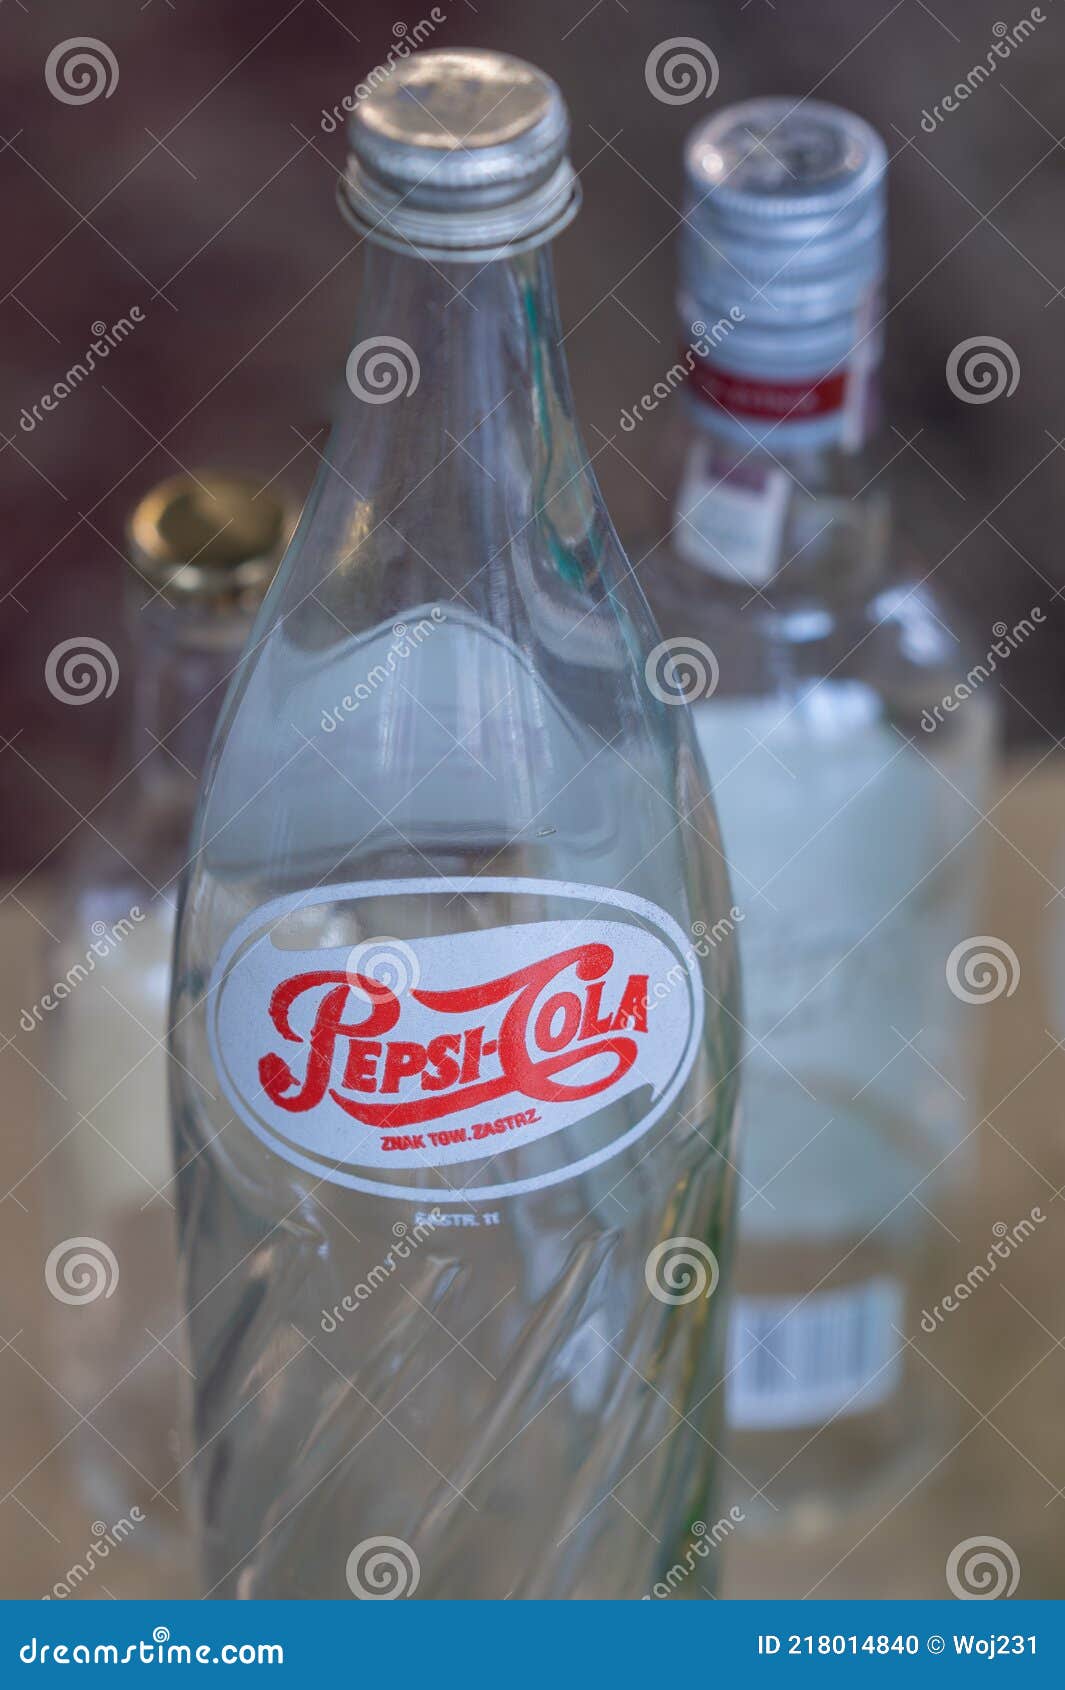 Bottles old pepsi